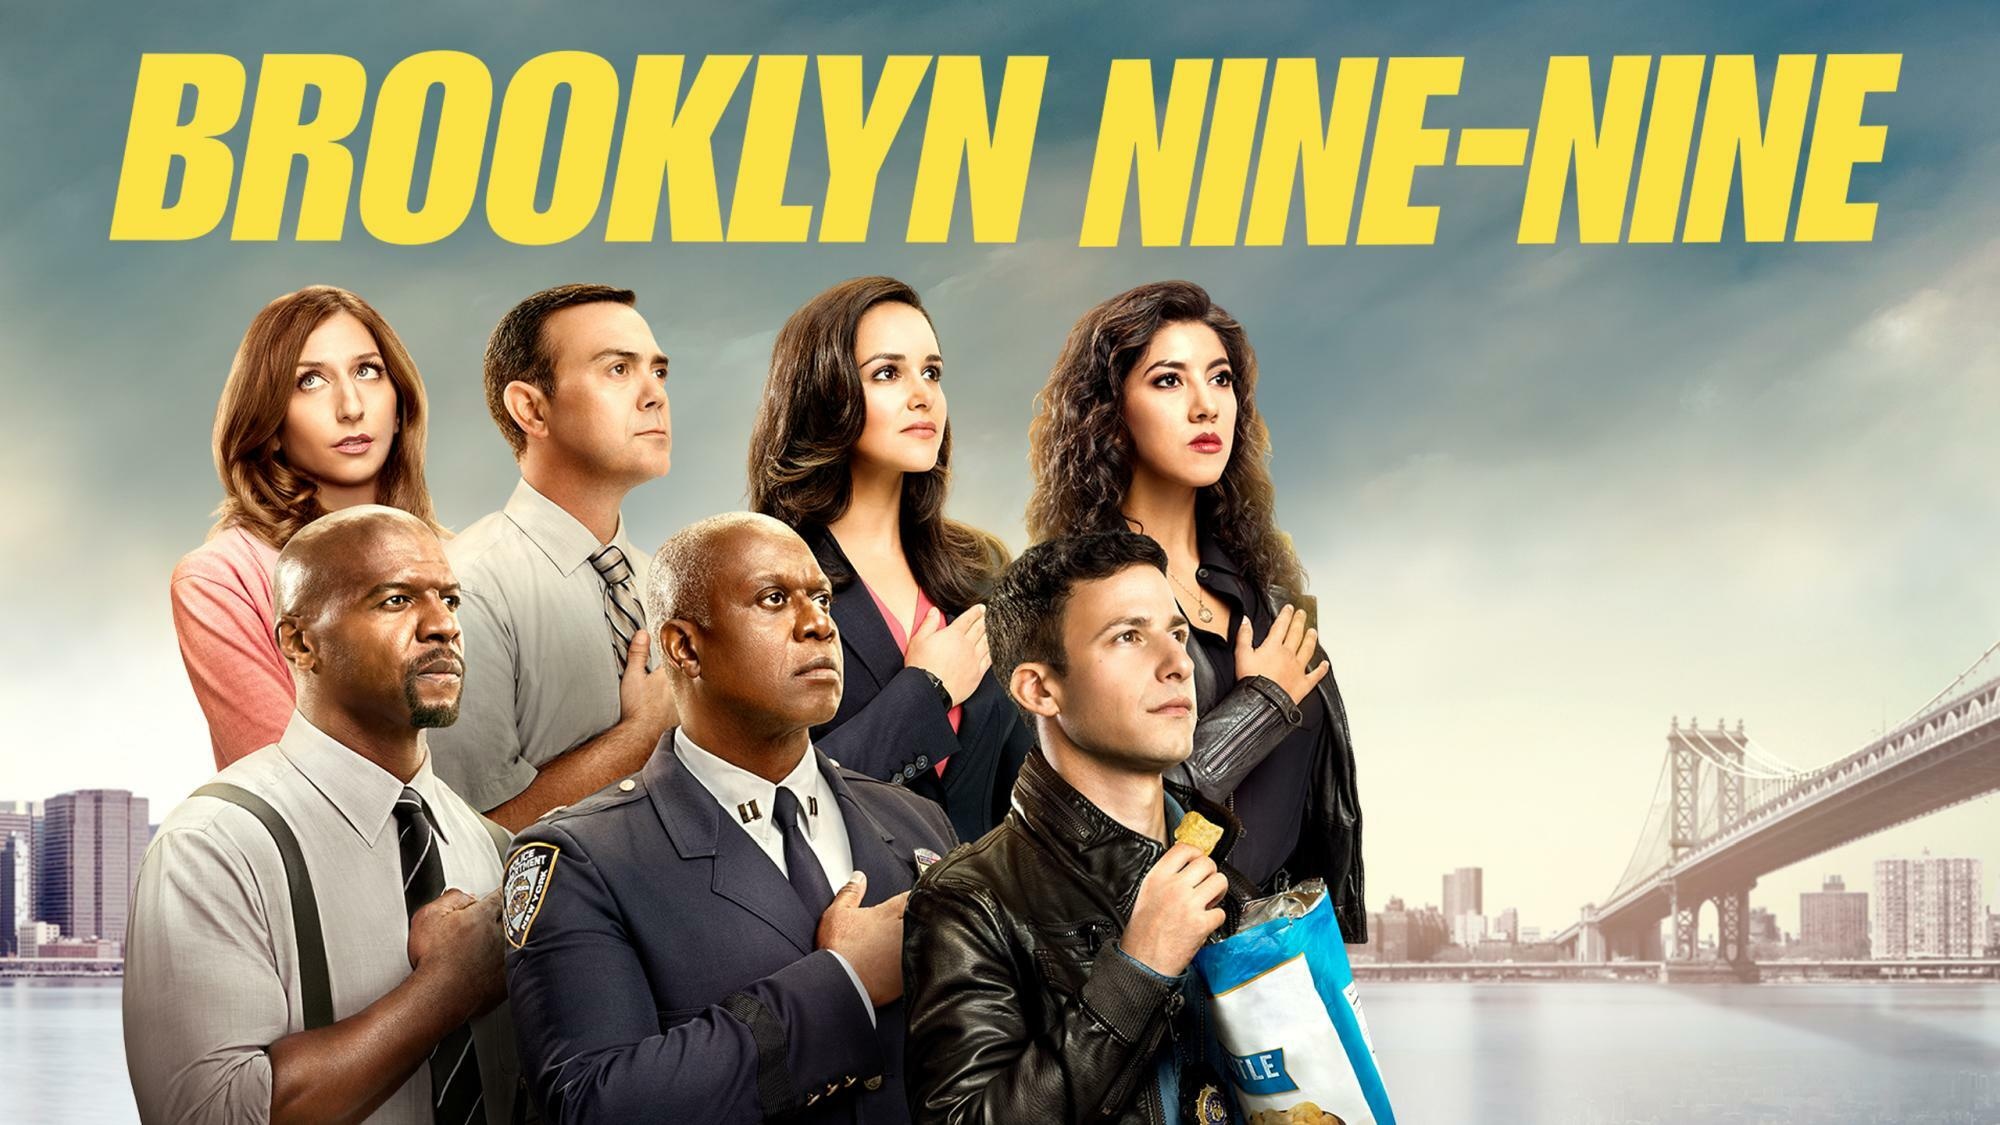 Brooklyn Nine-Nine (TV Series): Season 5, Charming, intelligently written take on the cop show format. 2000x1130 HD Wallpaper.